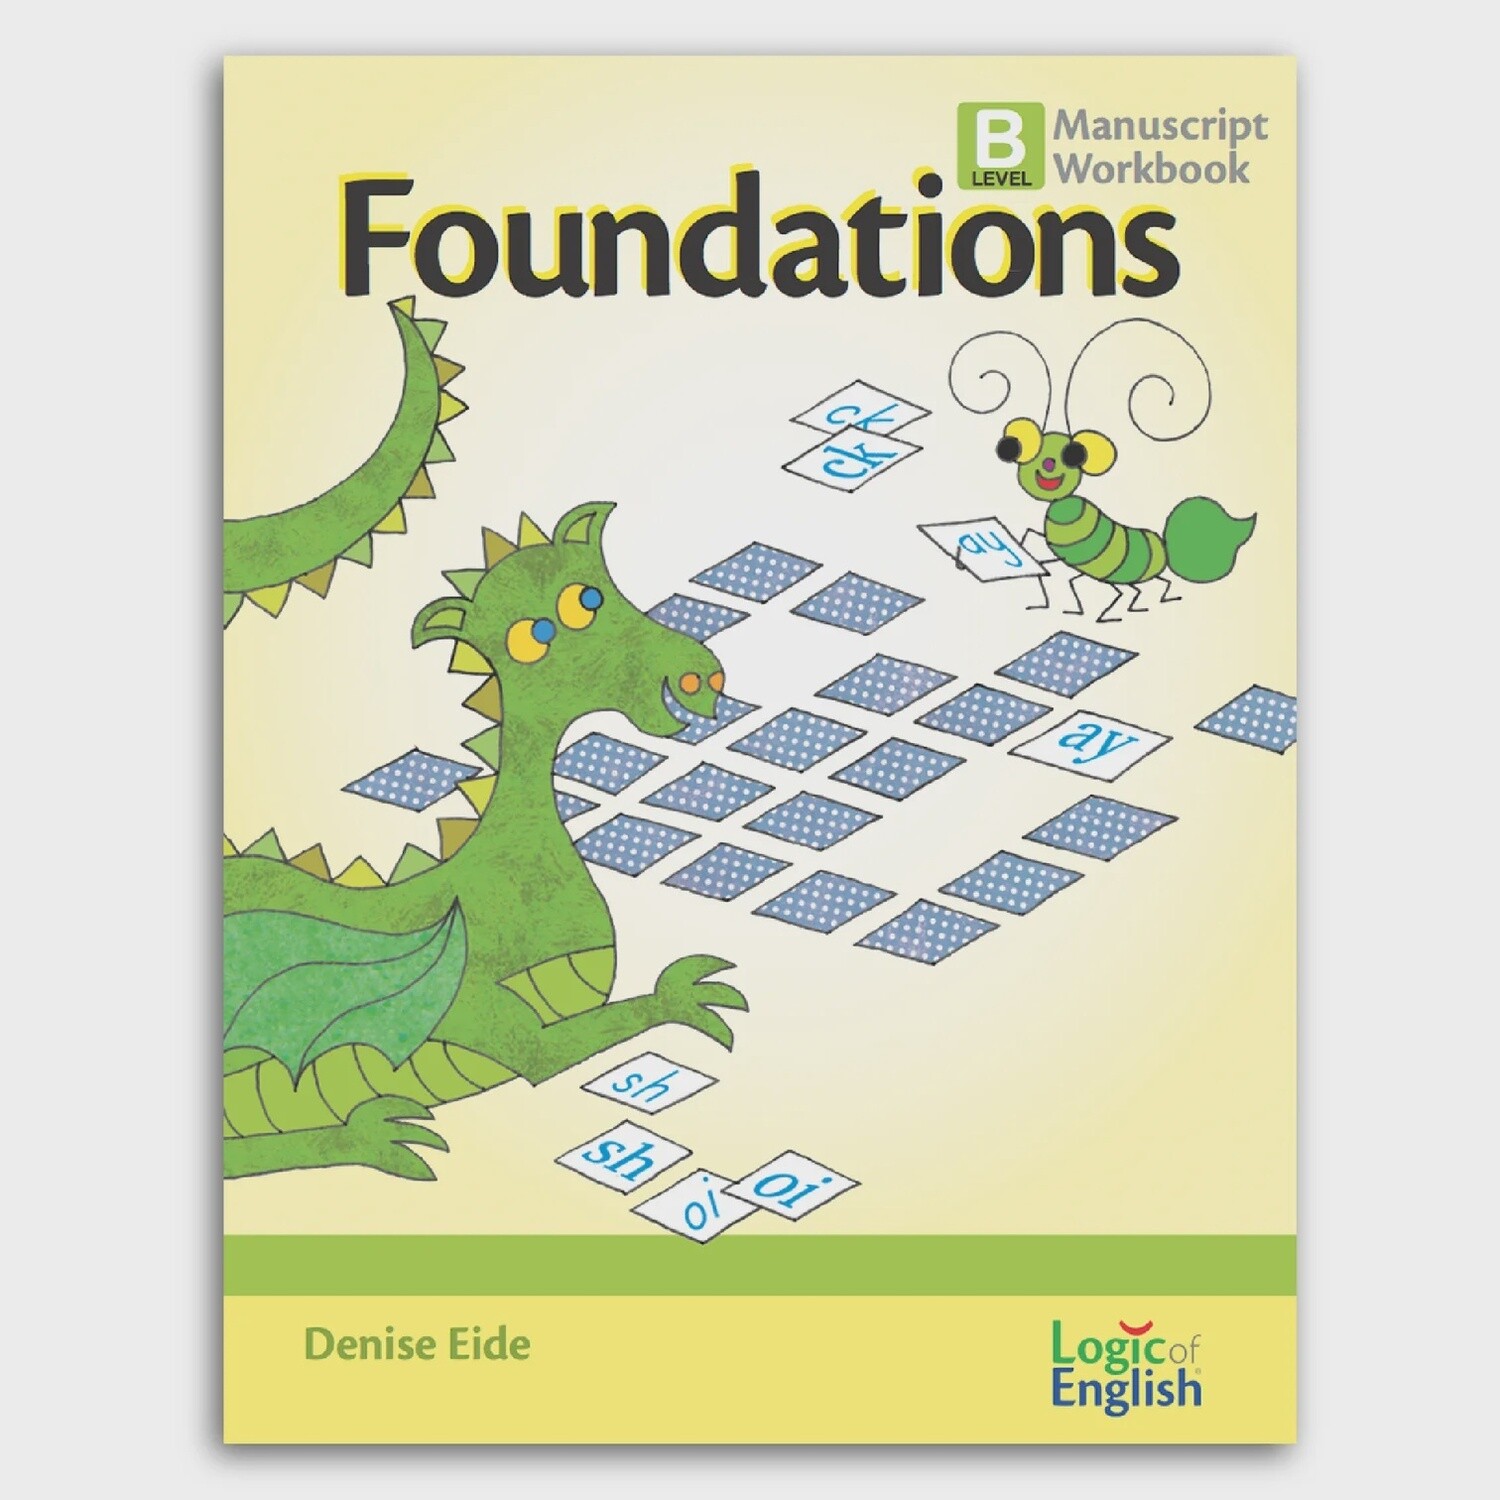 Used Logic of English Foundations Level B Manuscript workbook